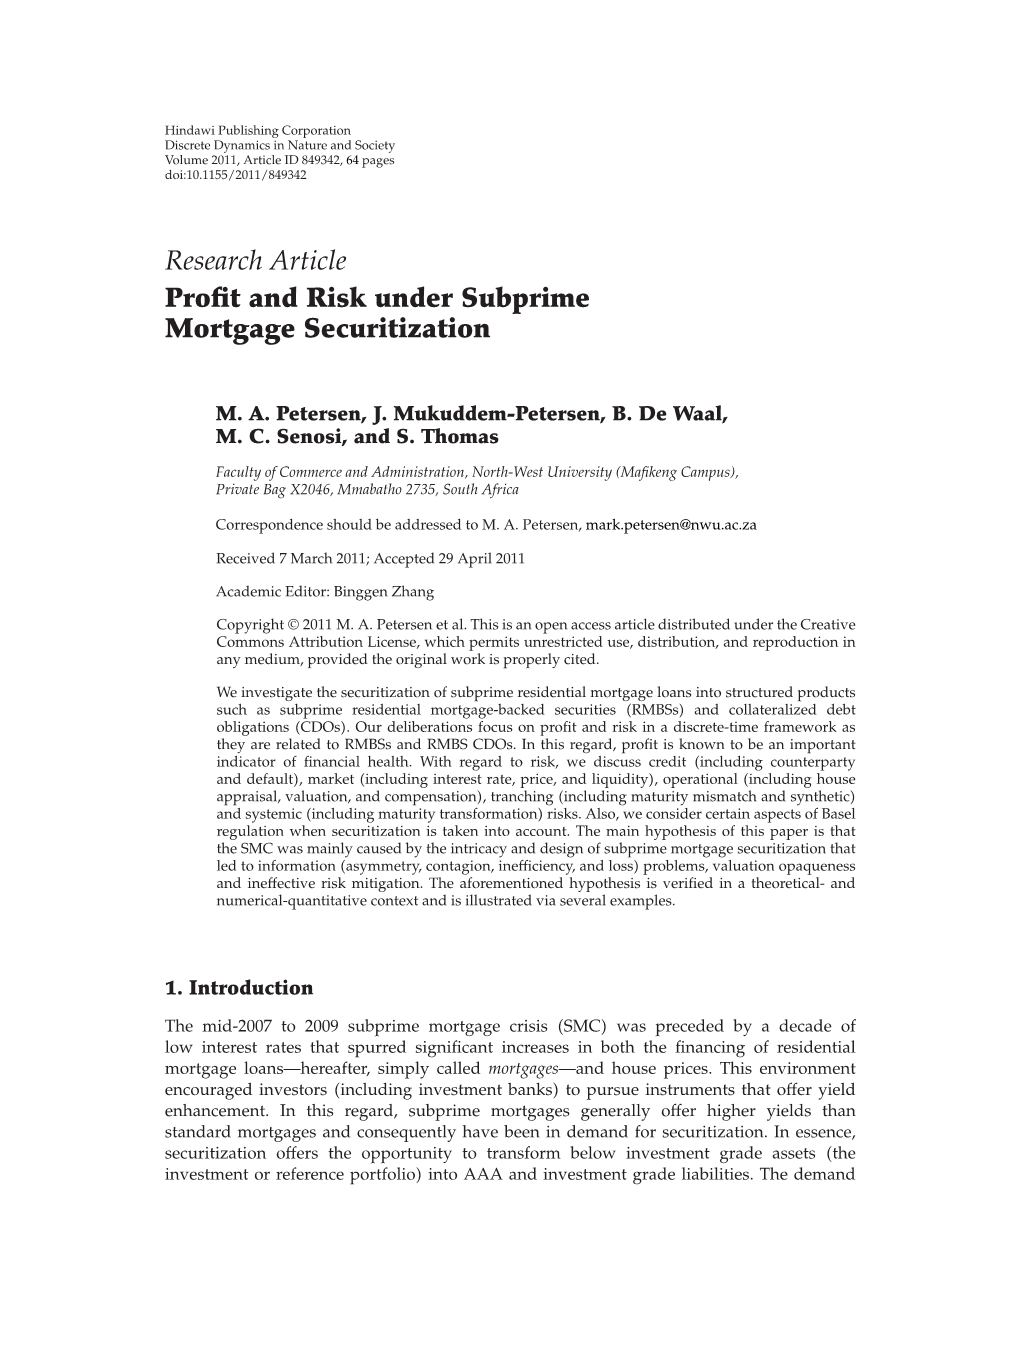 Profit and Risk Under Subprime Mortgage